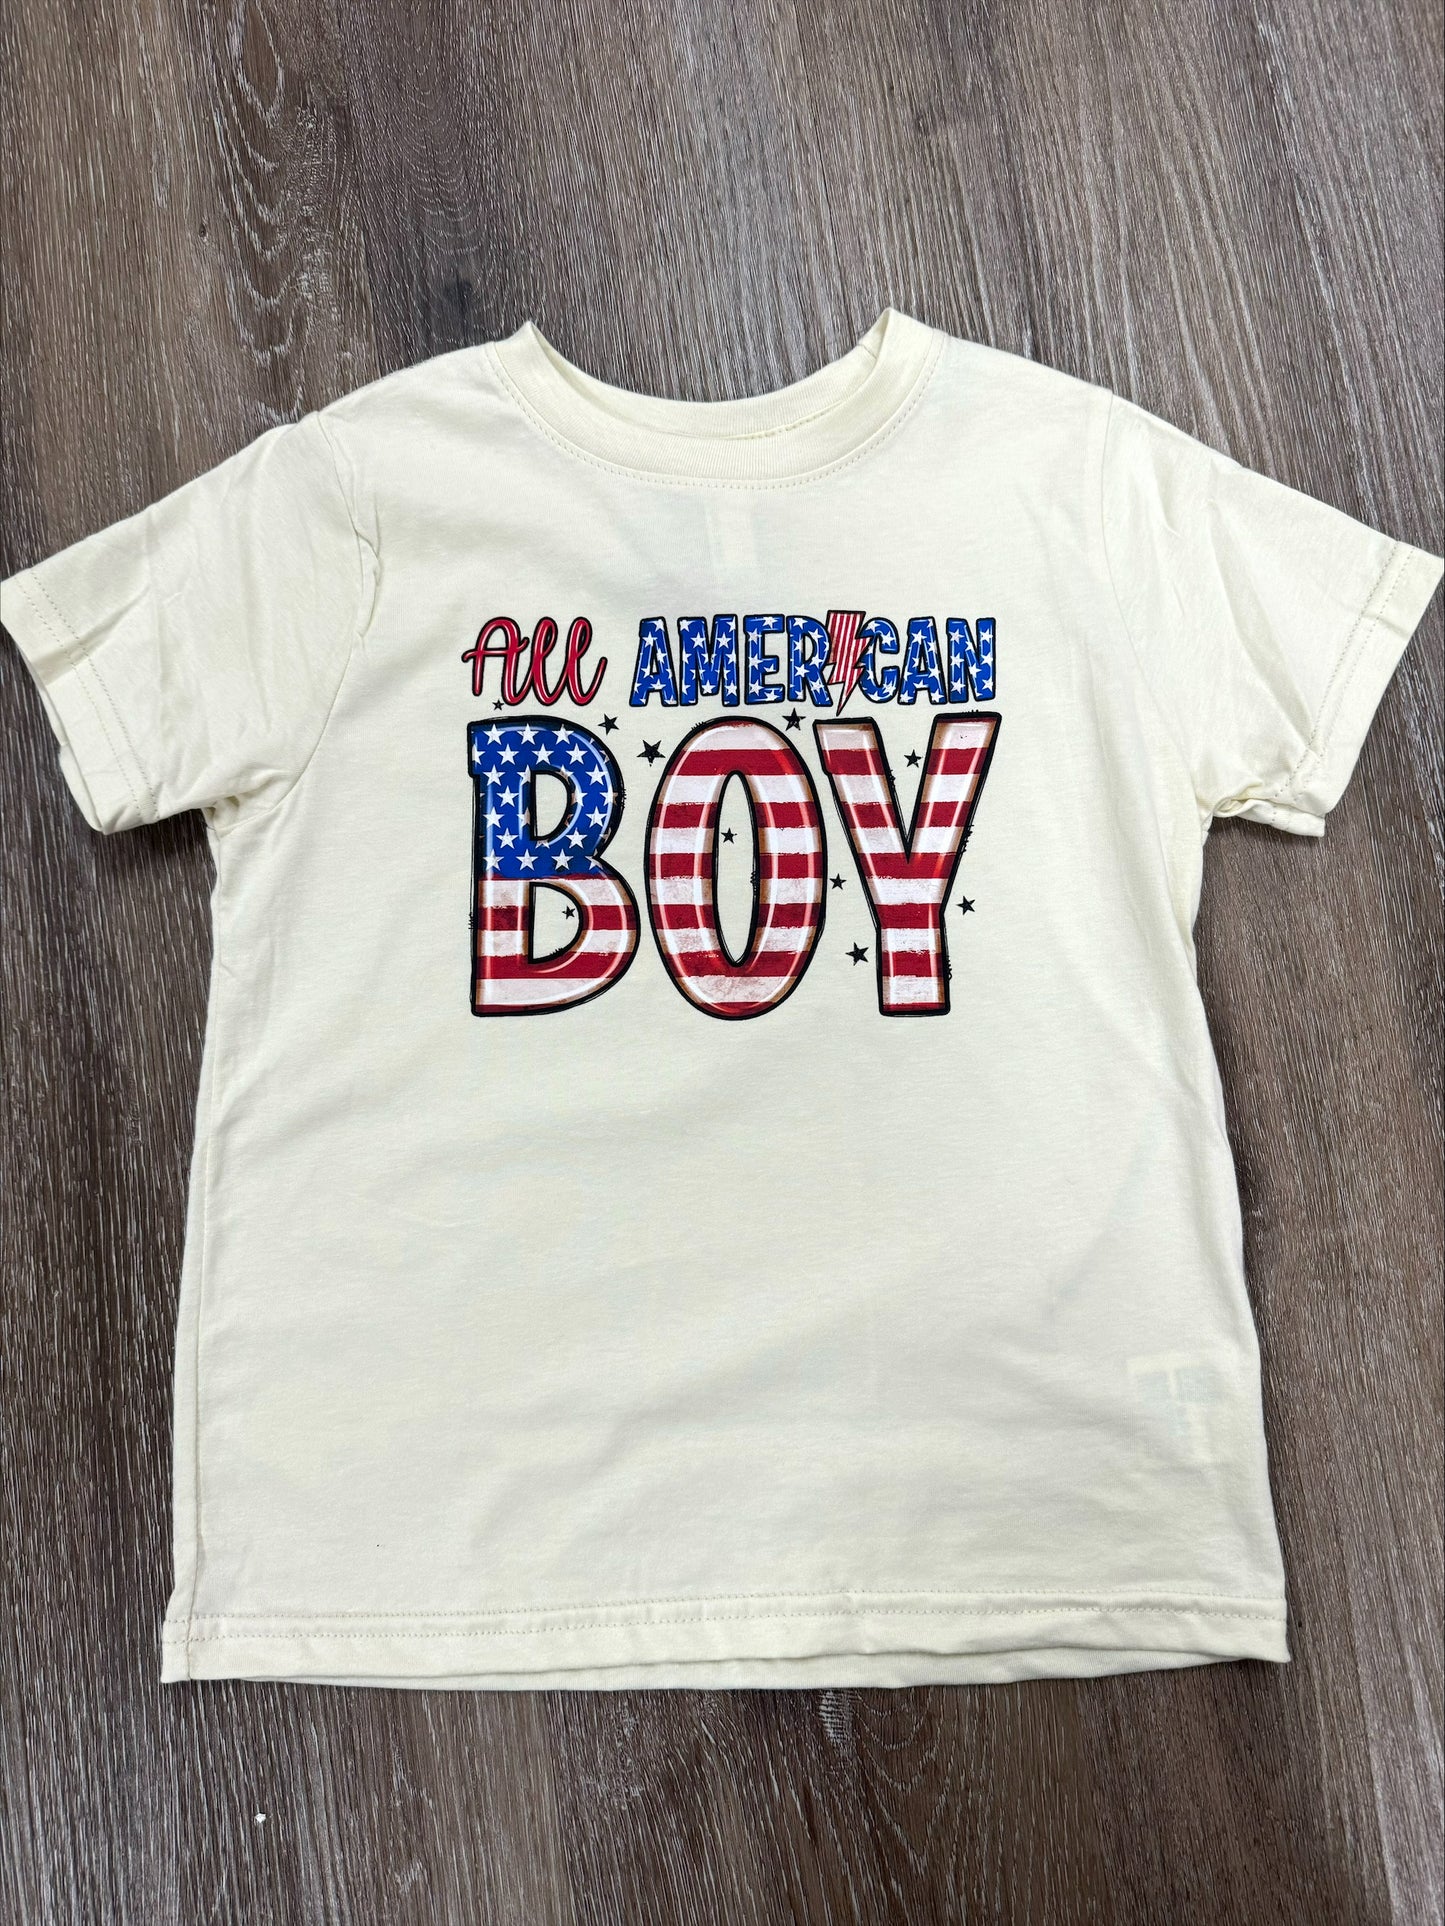 All American Boy Shirt